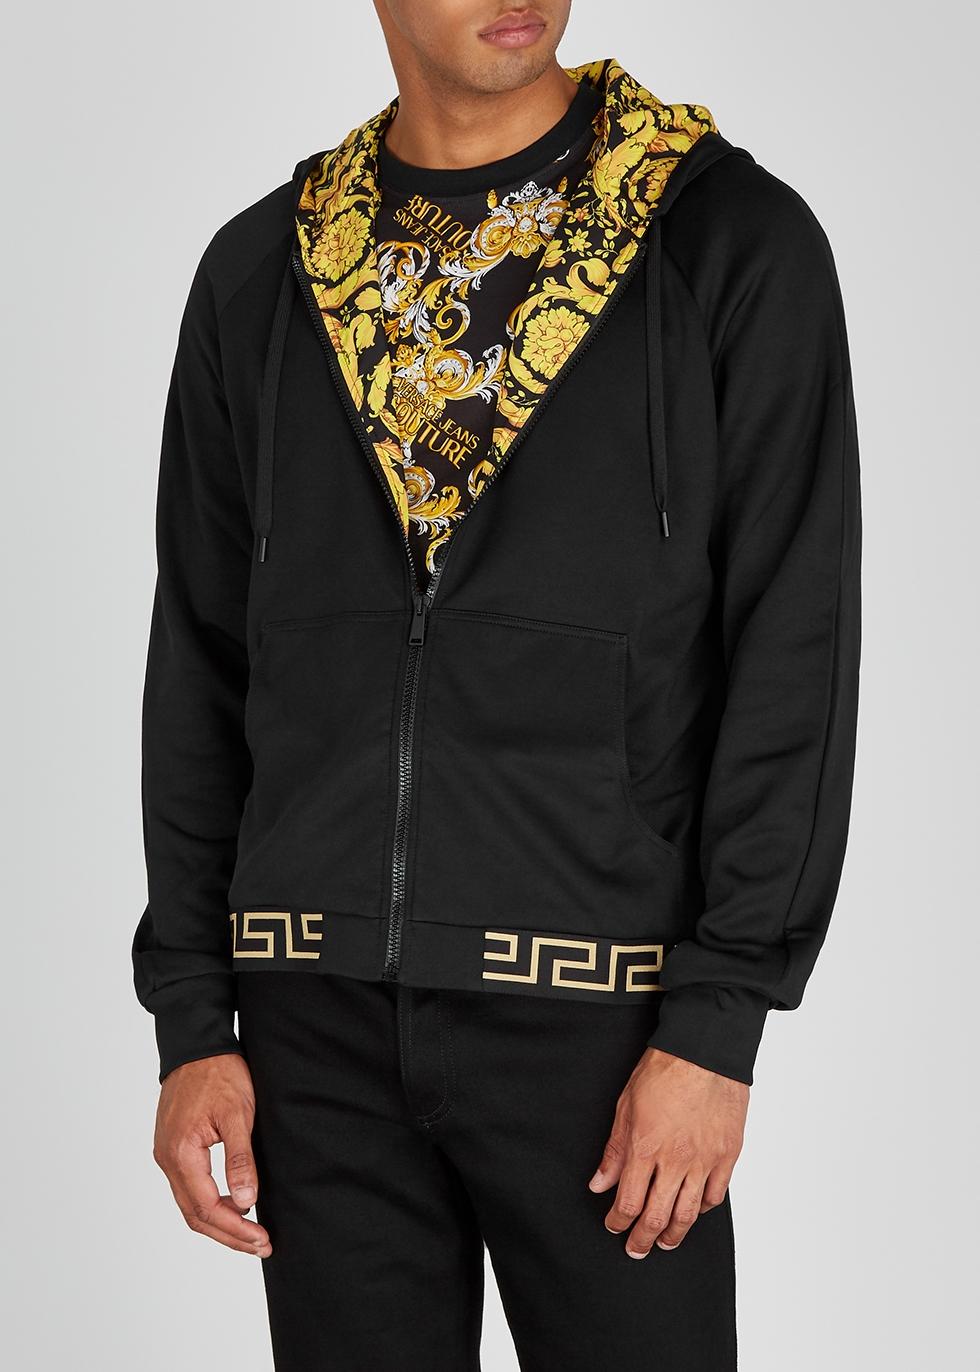 Versace Synthetic Black Hooded Jersey Sweatshirt for Men - Lyst